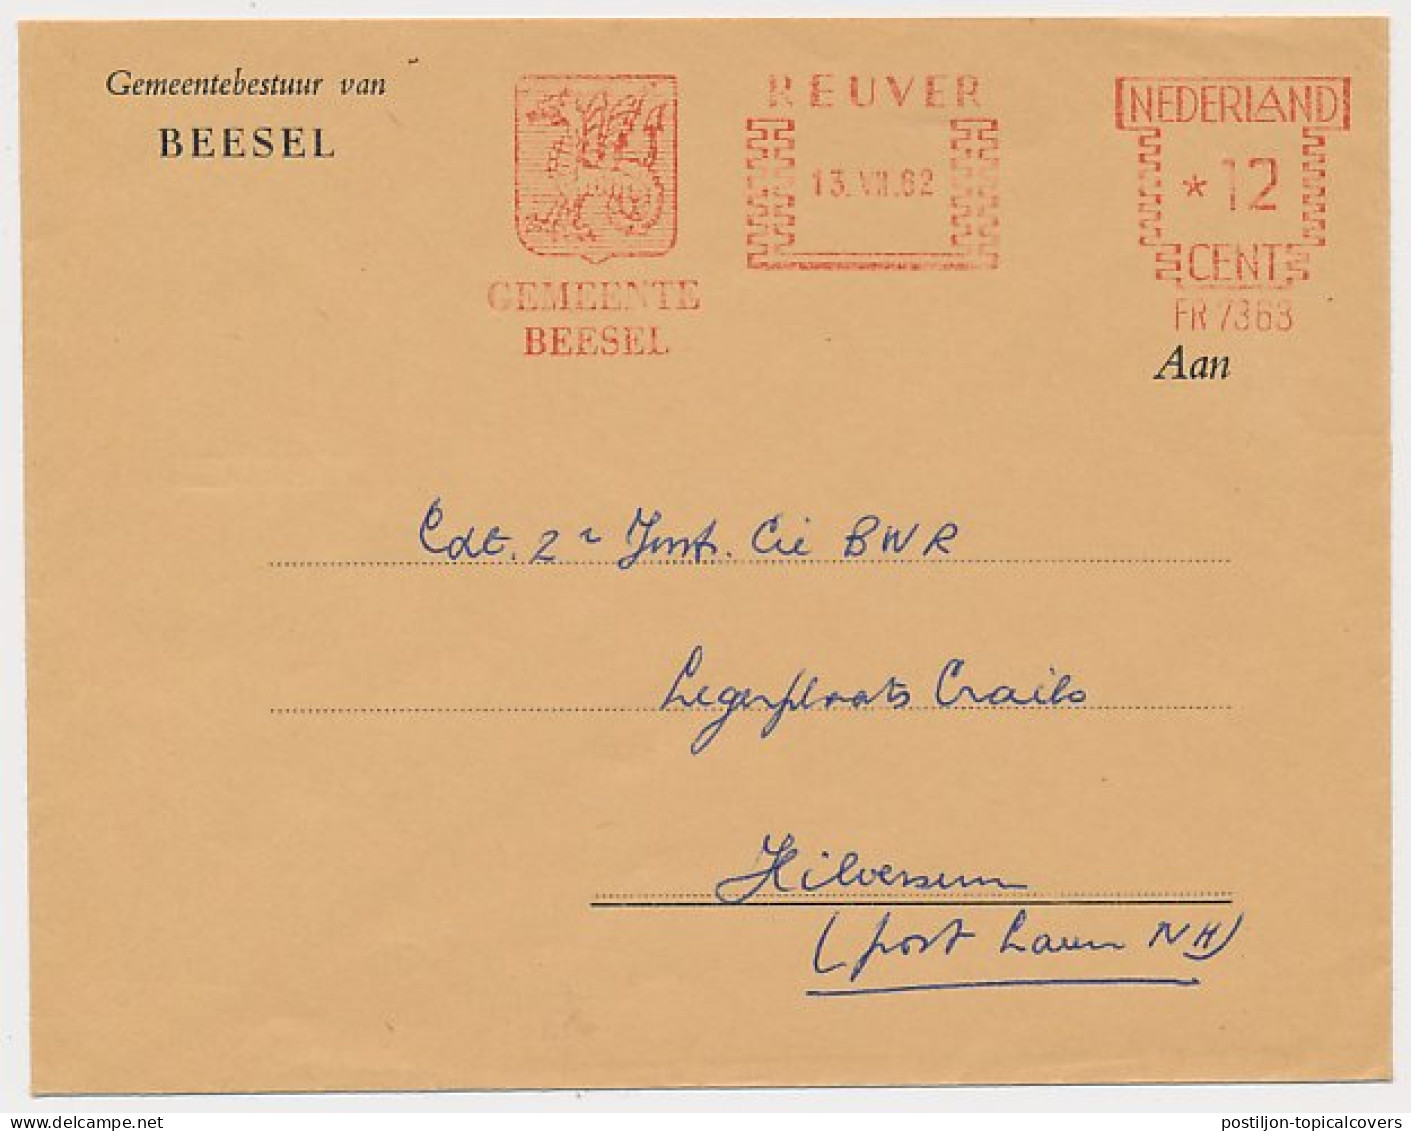 Meter Cover Netherlands 1962 Dragon - Municipal Coat Of Arms Beesel - Reuver - Mythology